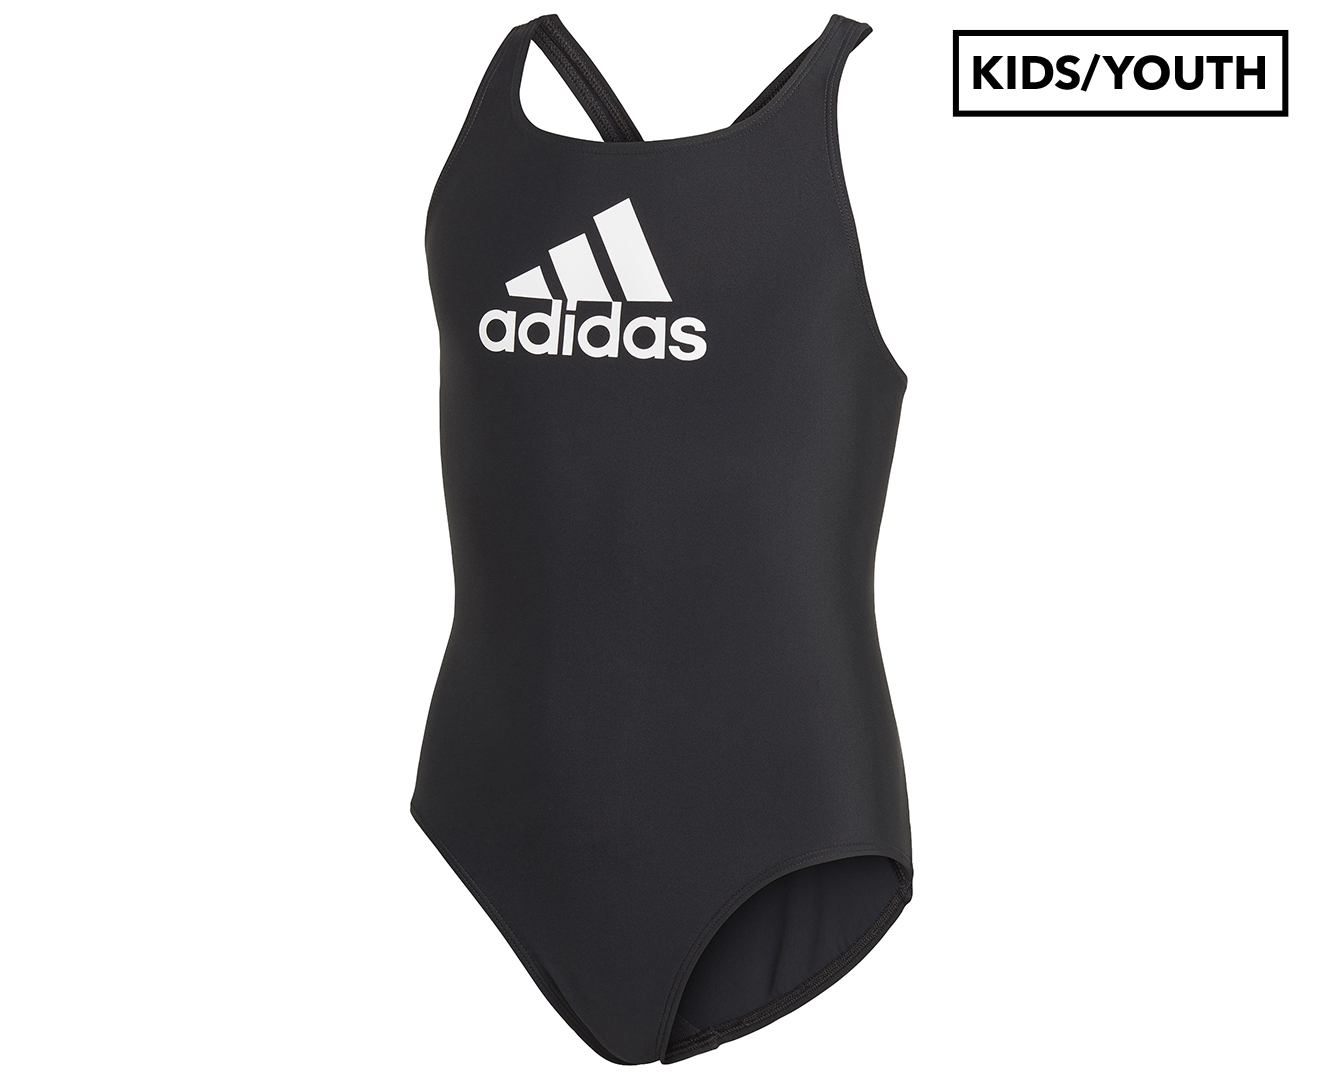 Larva del moscardón Memorándum Millas Adidas Girls' Badge of Sport One-Piece Swimsuit - Black/White | Catch.com.au